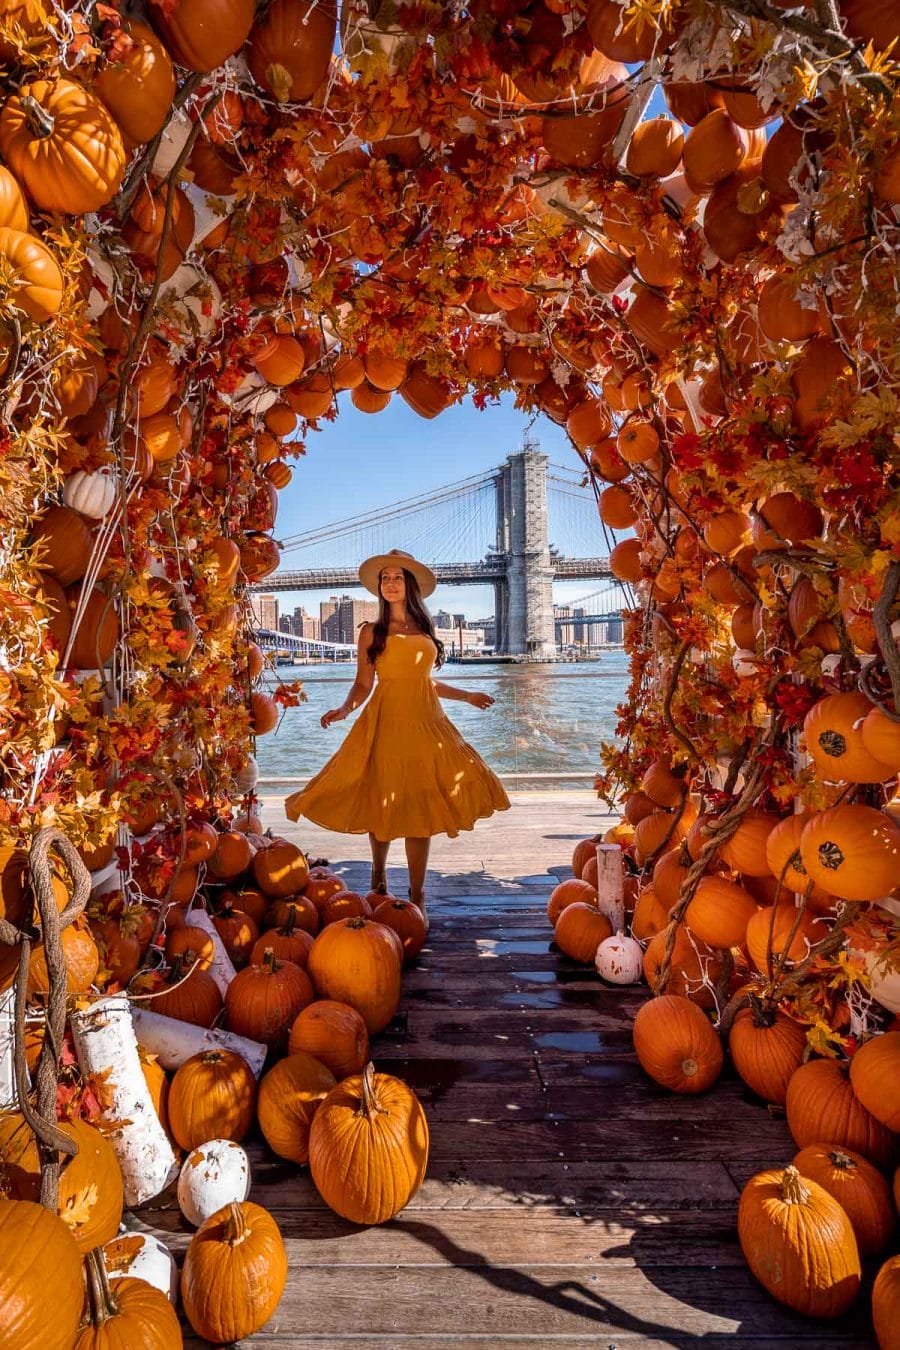 Girl in yellow dress standing below a cute Pumpkin arch at Pier 17 in New York City